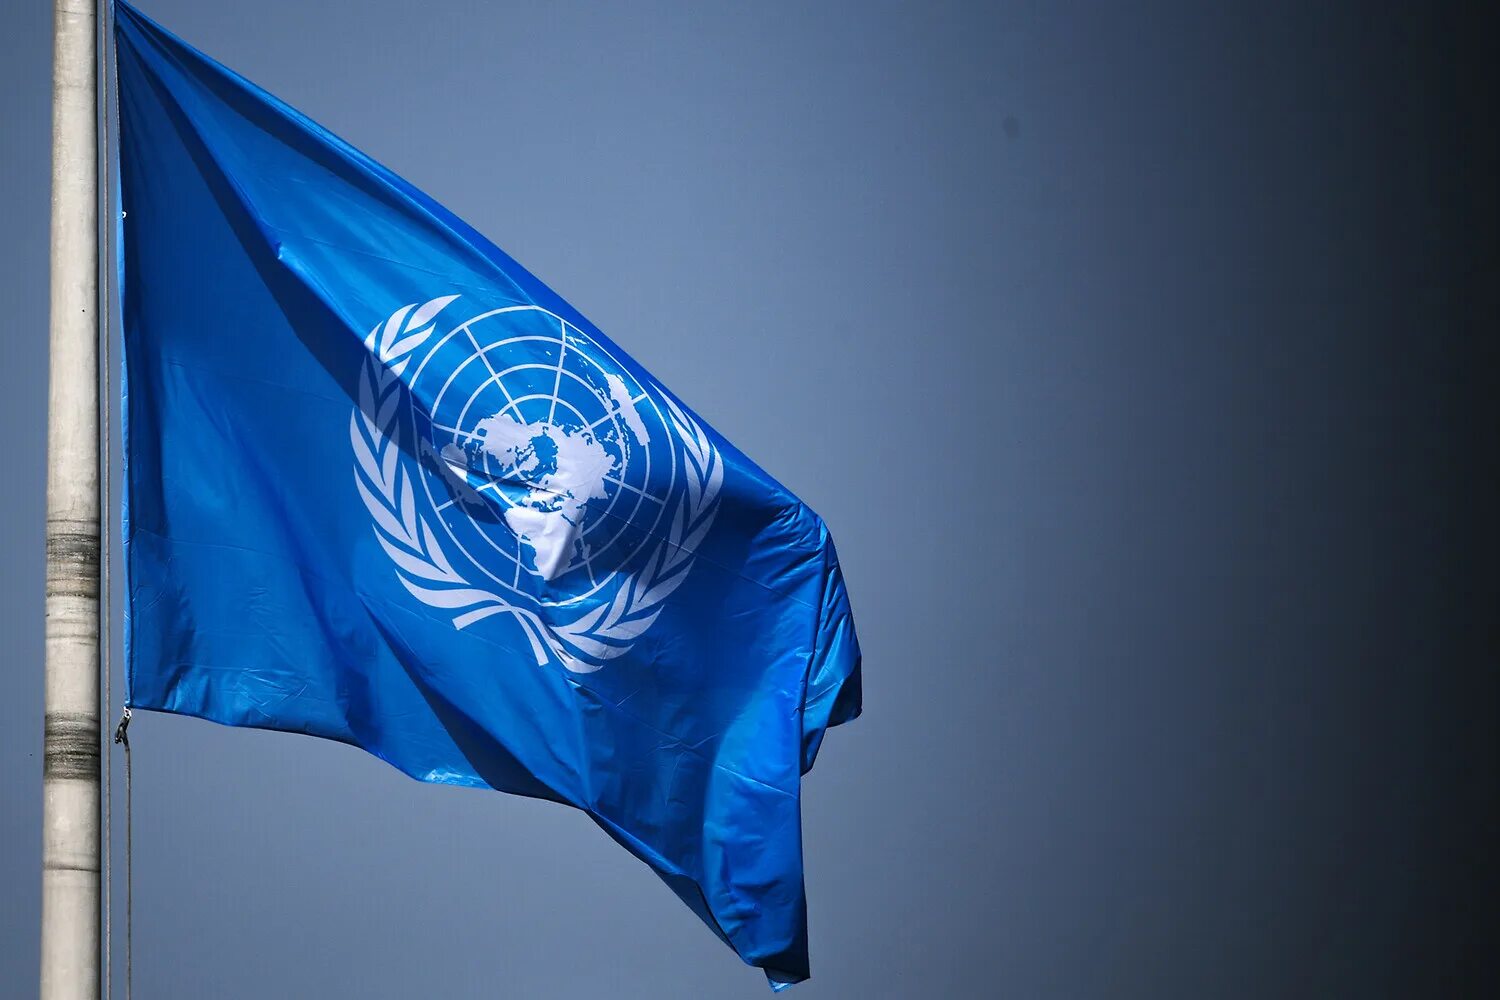 Организации оон в сша. Флаг ООН. Флаг организации Объединенных наций. Генеральная Ассамблея ООН флаг. Организация Объединенных наций (ООН).